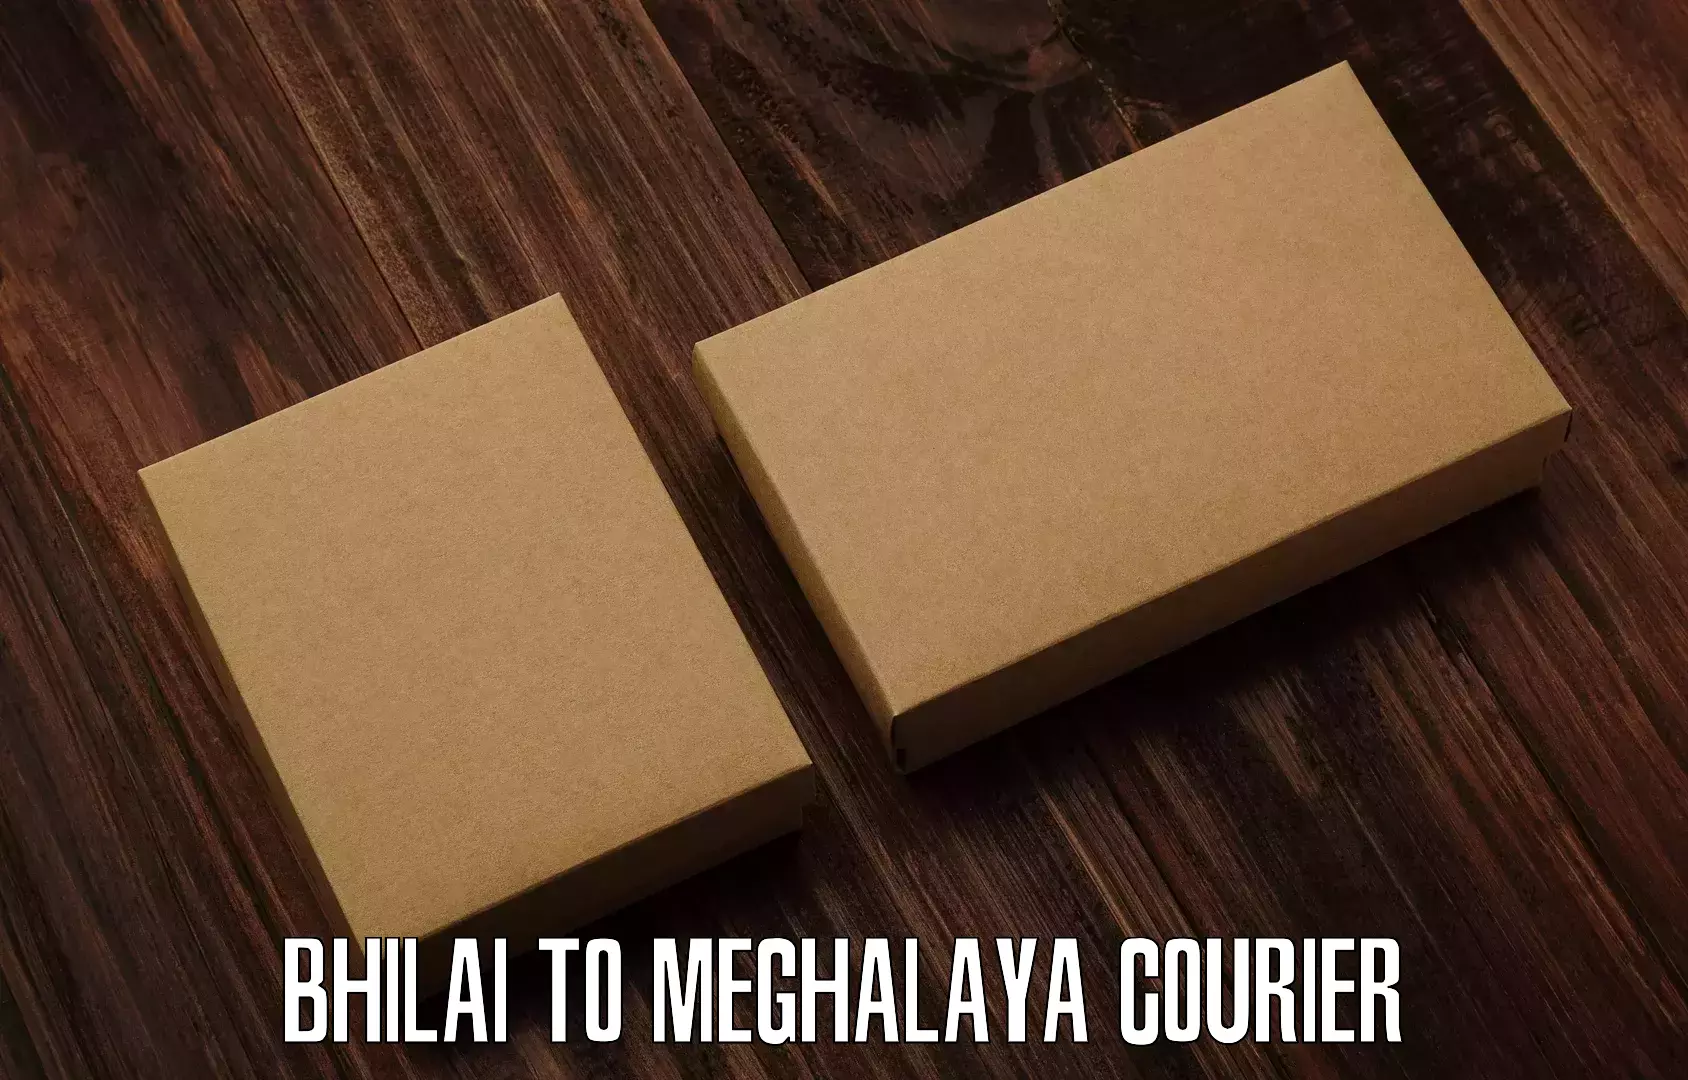 Courier membership in Bhilai to Cherrapunji